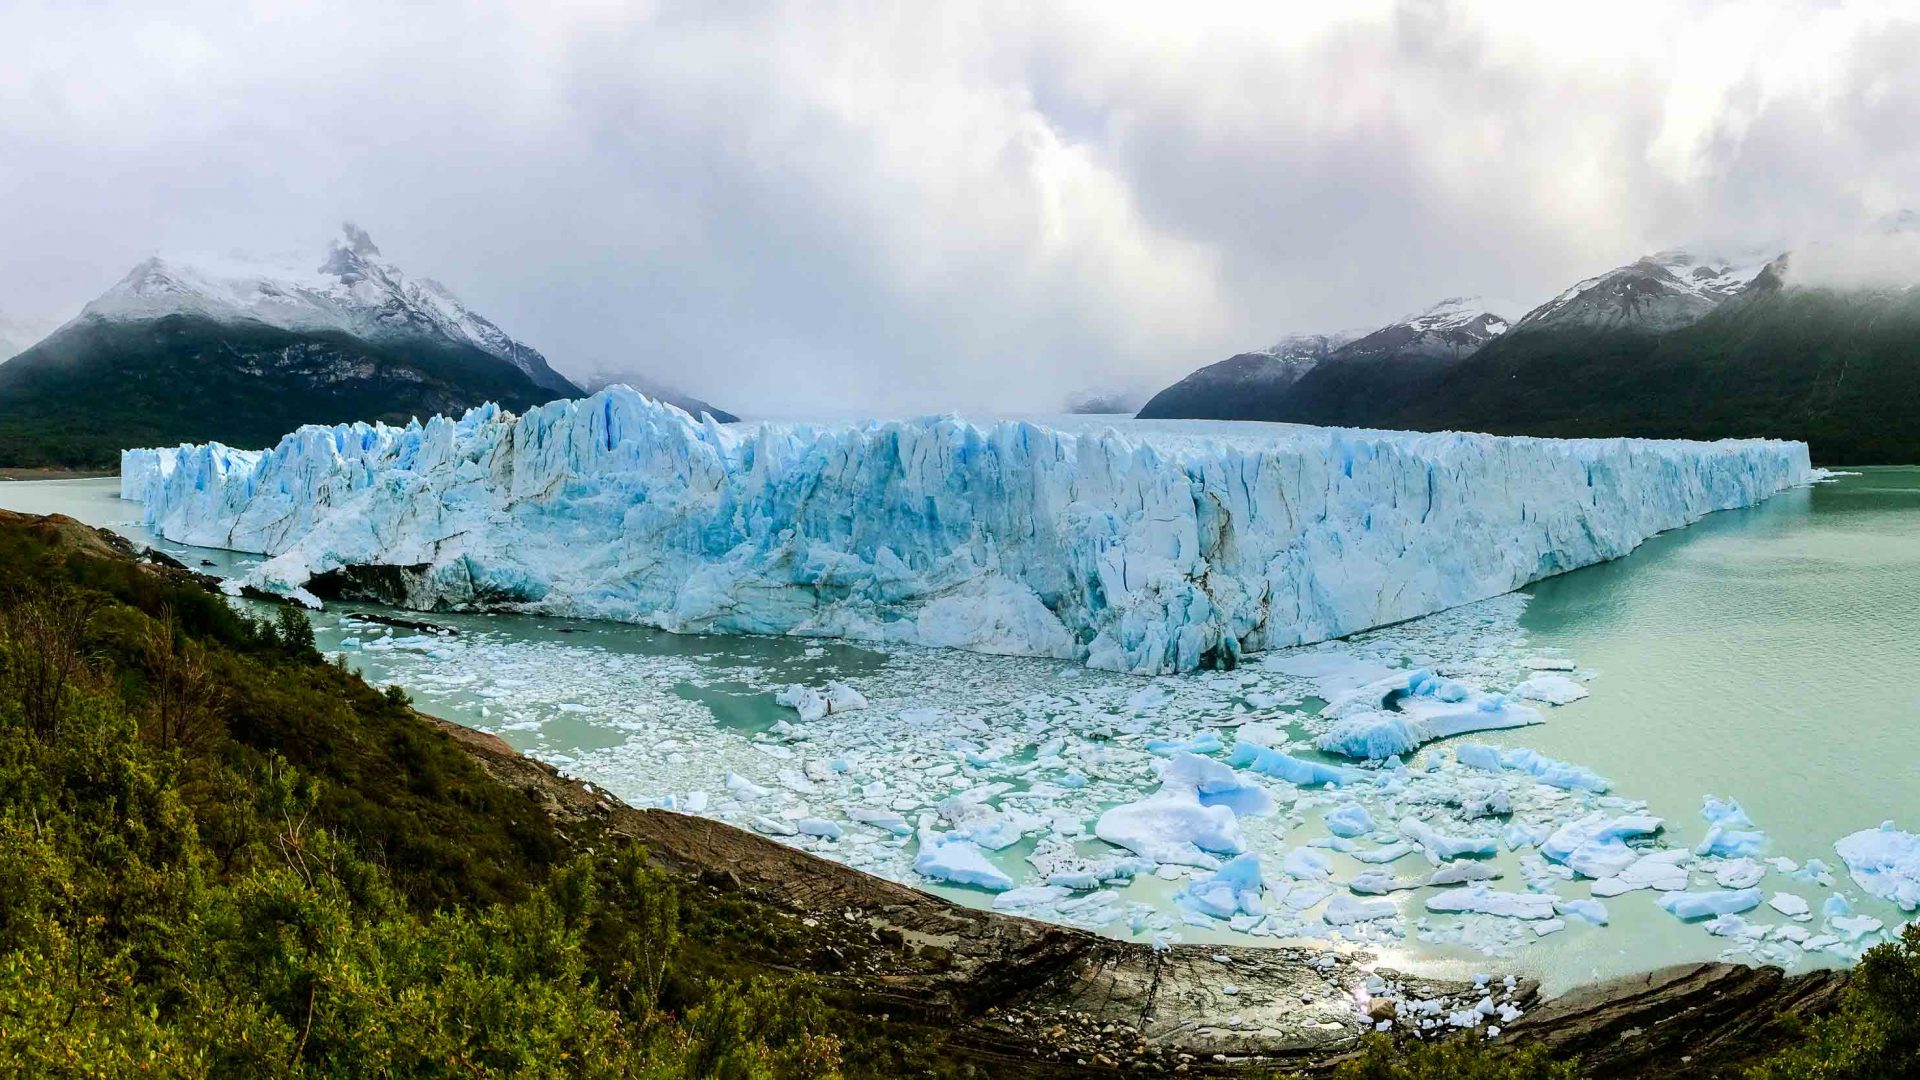 The Perito Moreno glacier is UNESCO heritage-listed and feeds the Rio Santa Cruz.